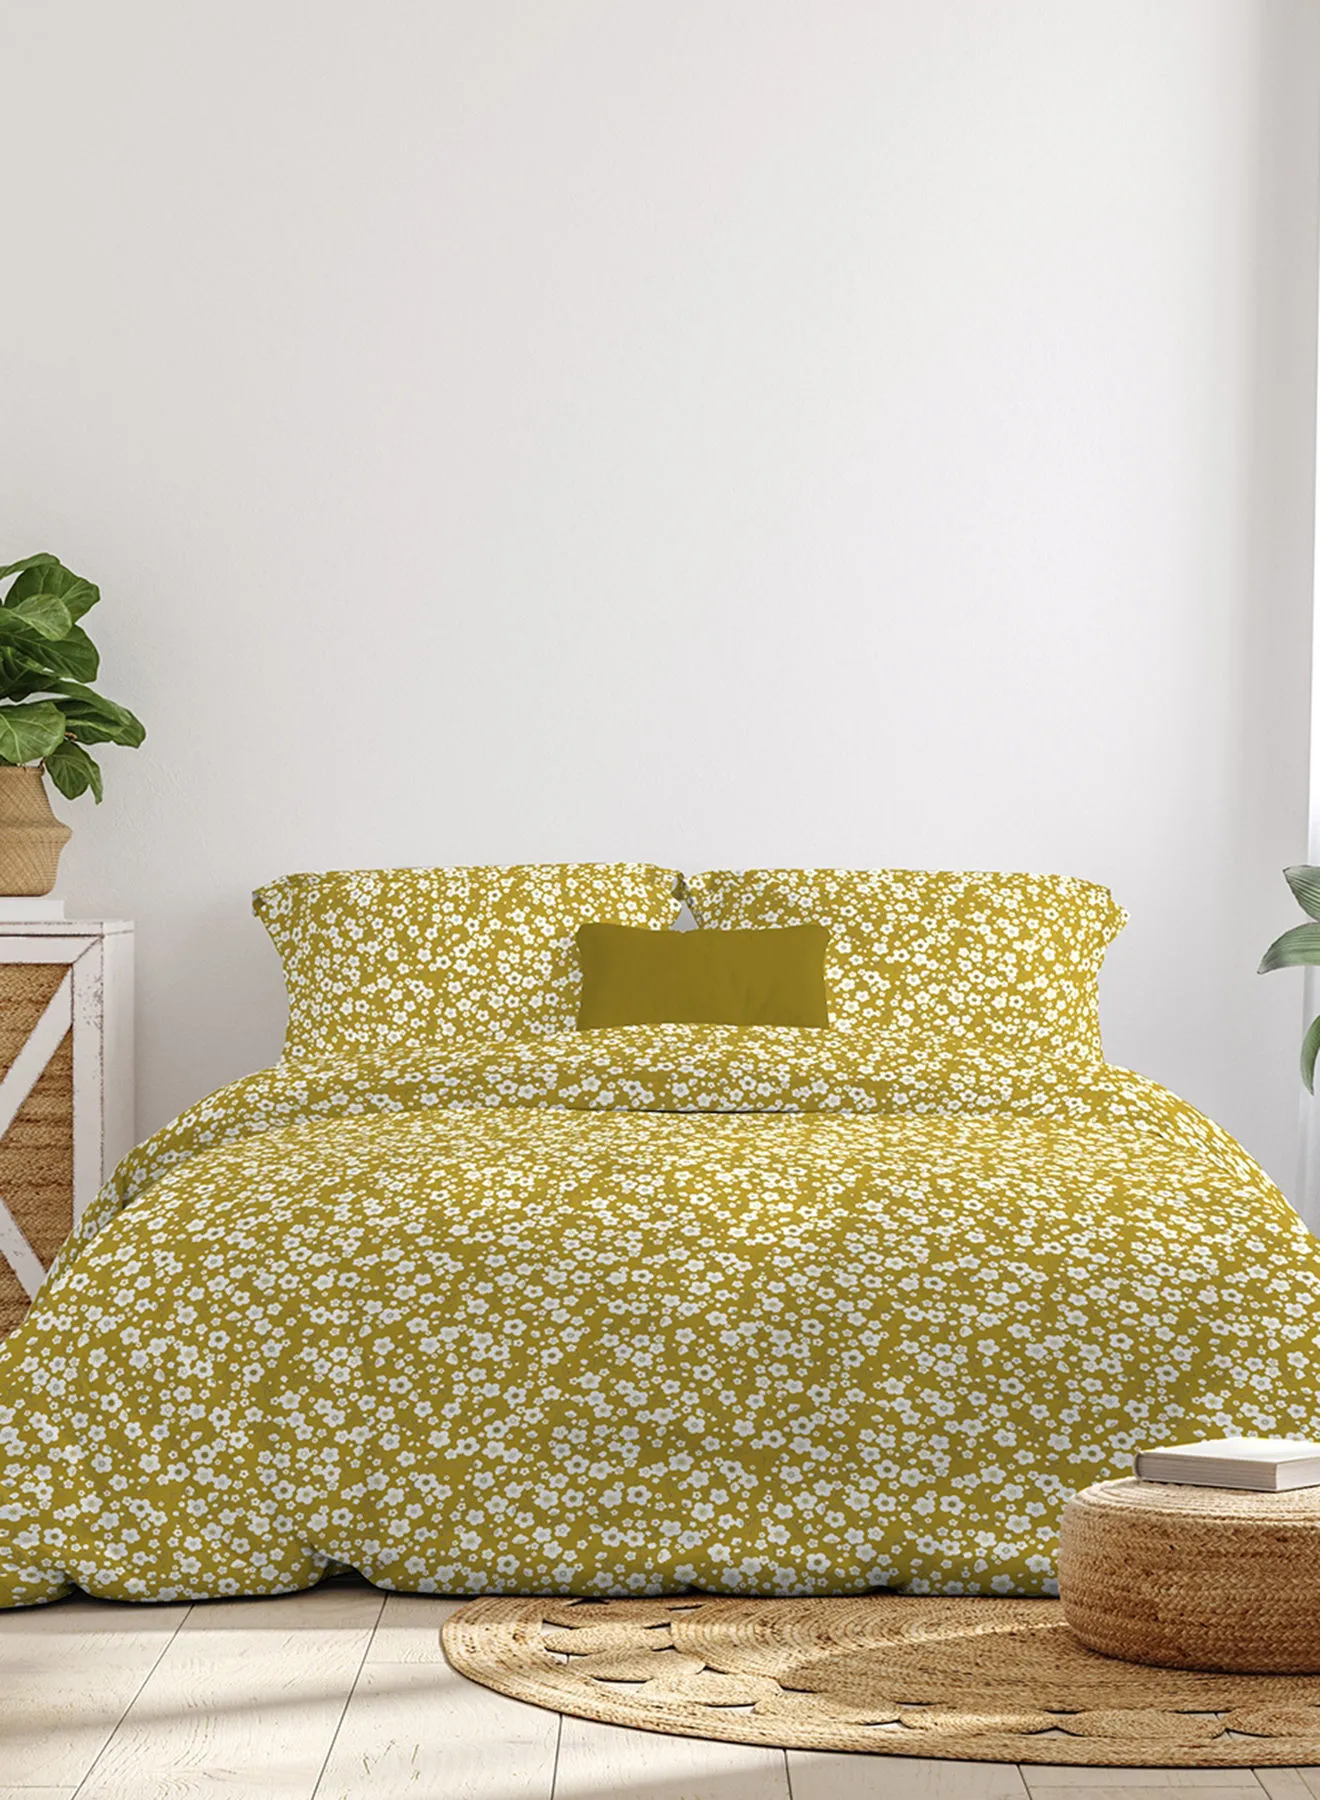 Amal Comforter Set King Size All Season Everyday Use Bedding Set 100% Cotton 3 Pieces 1 Comforter 2 Pillow Covers  Pantone Gold